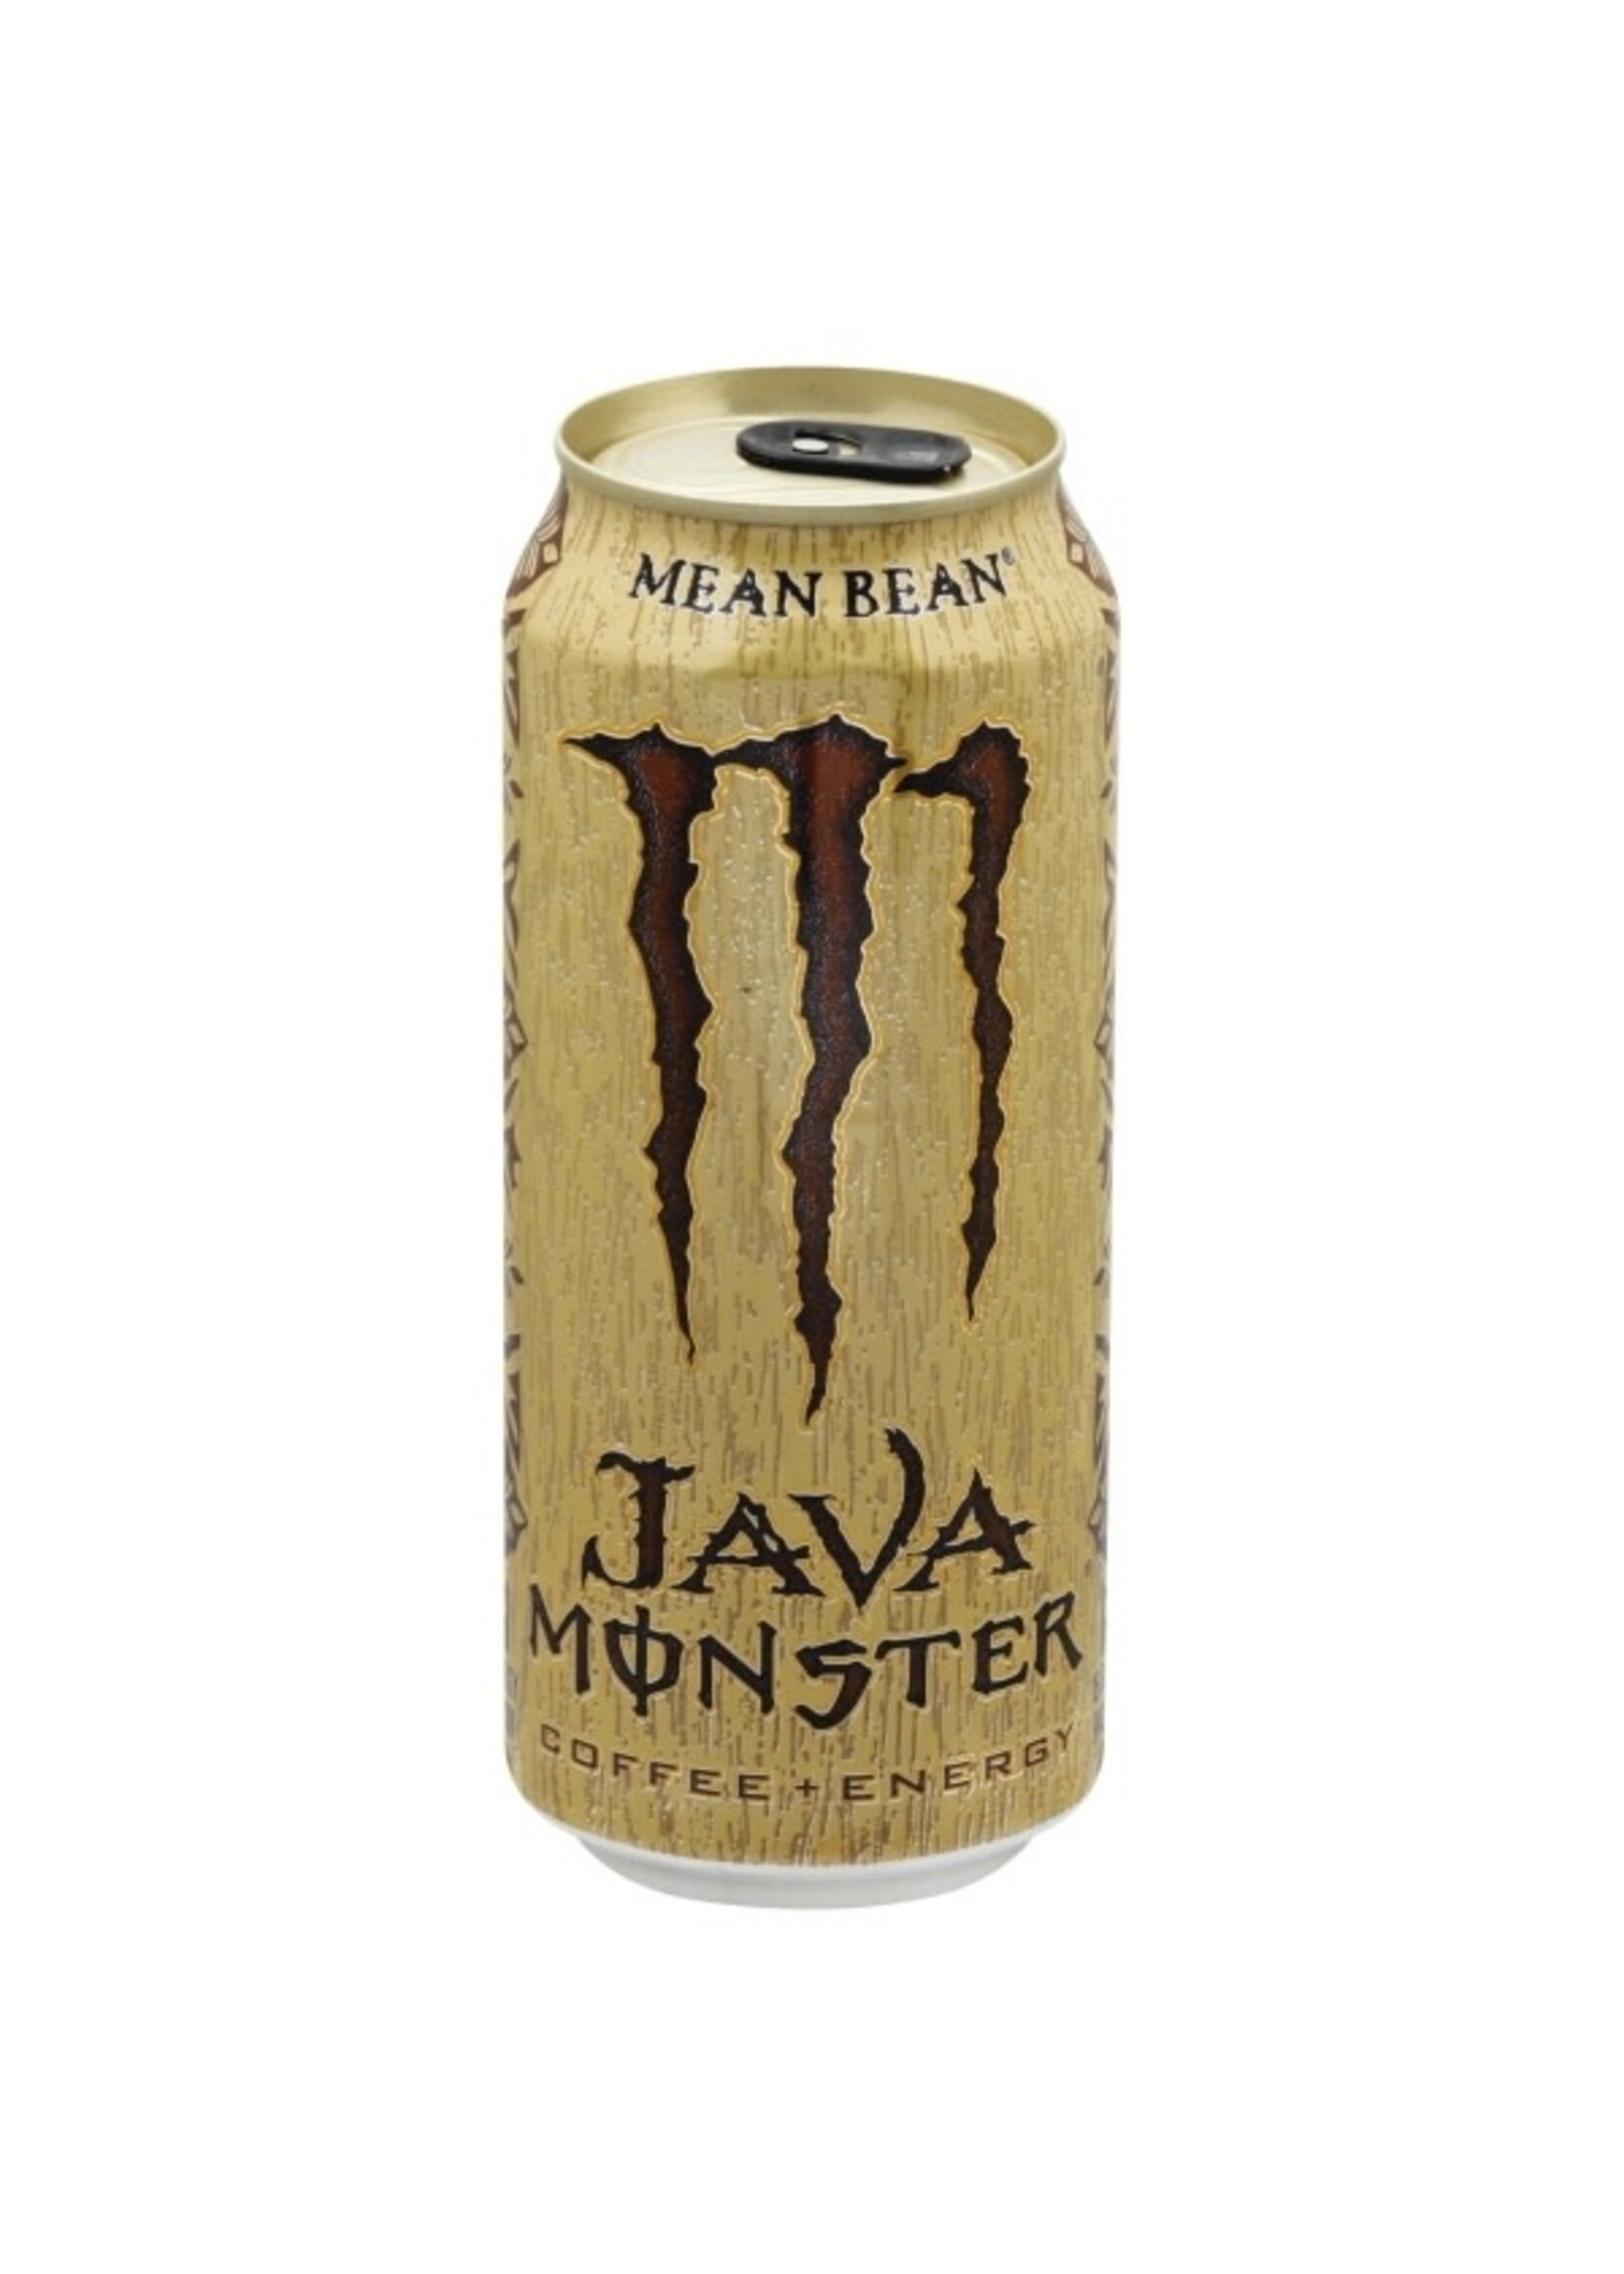 Monster Java Mean Bean Coffee + Energy 15oz